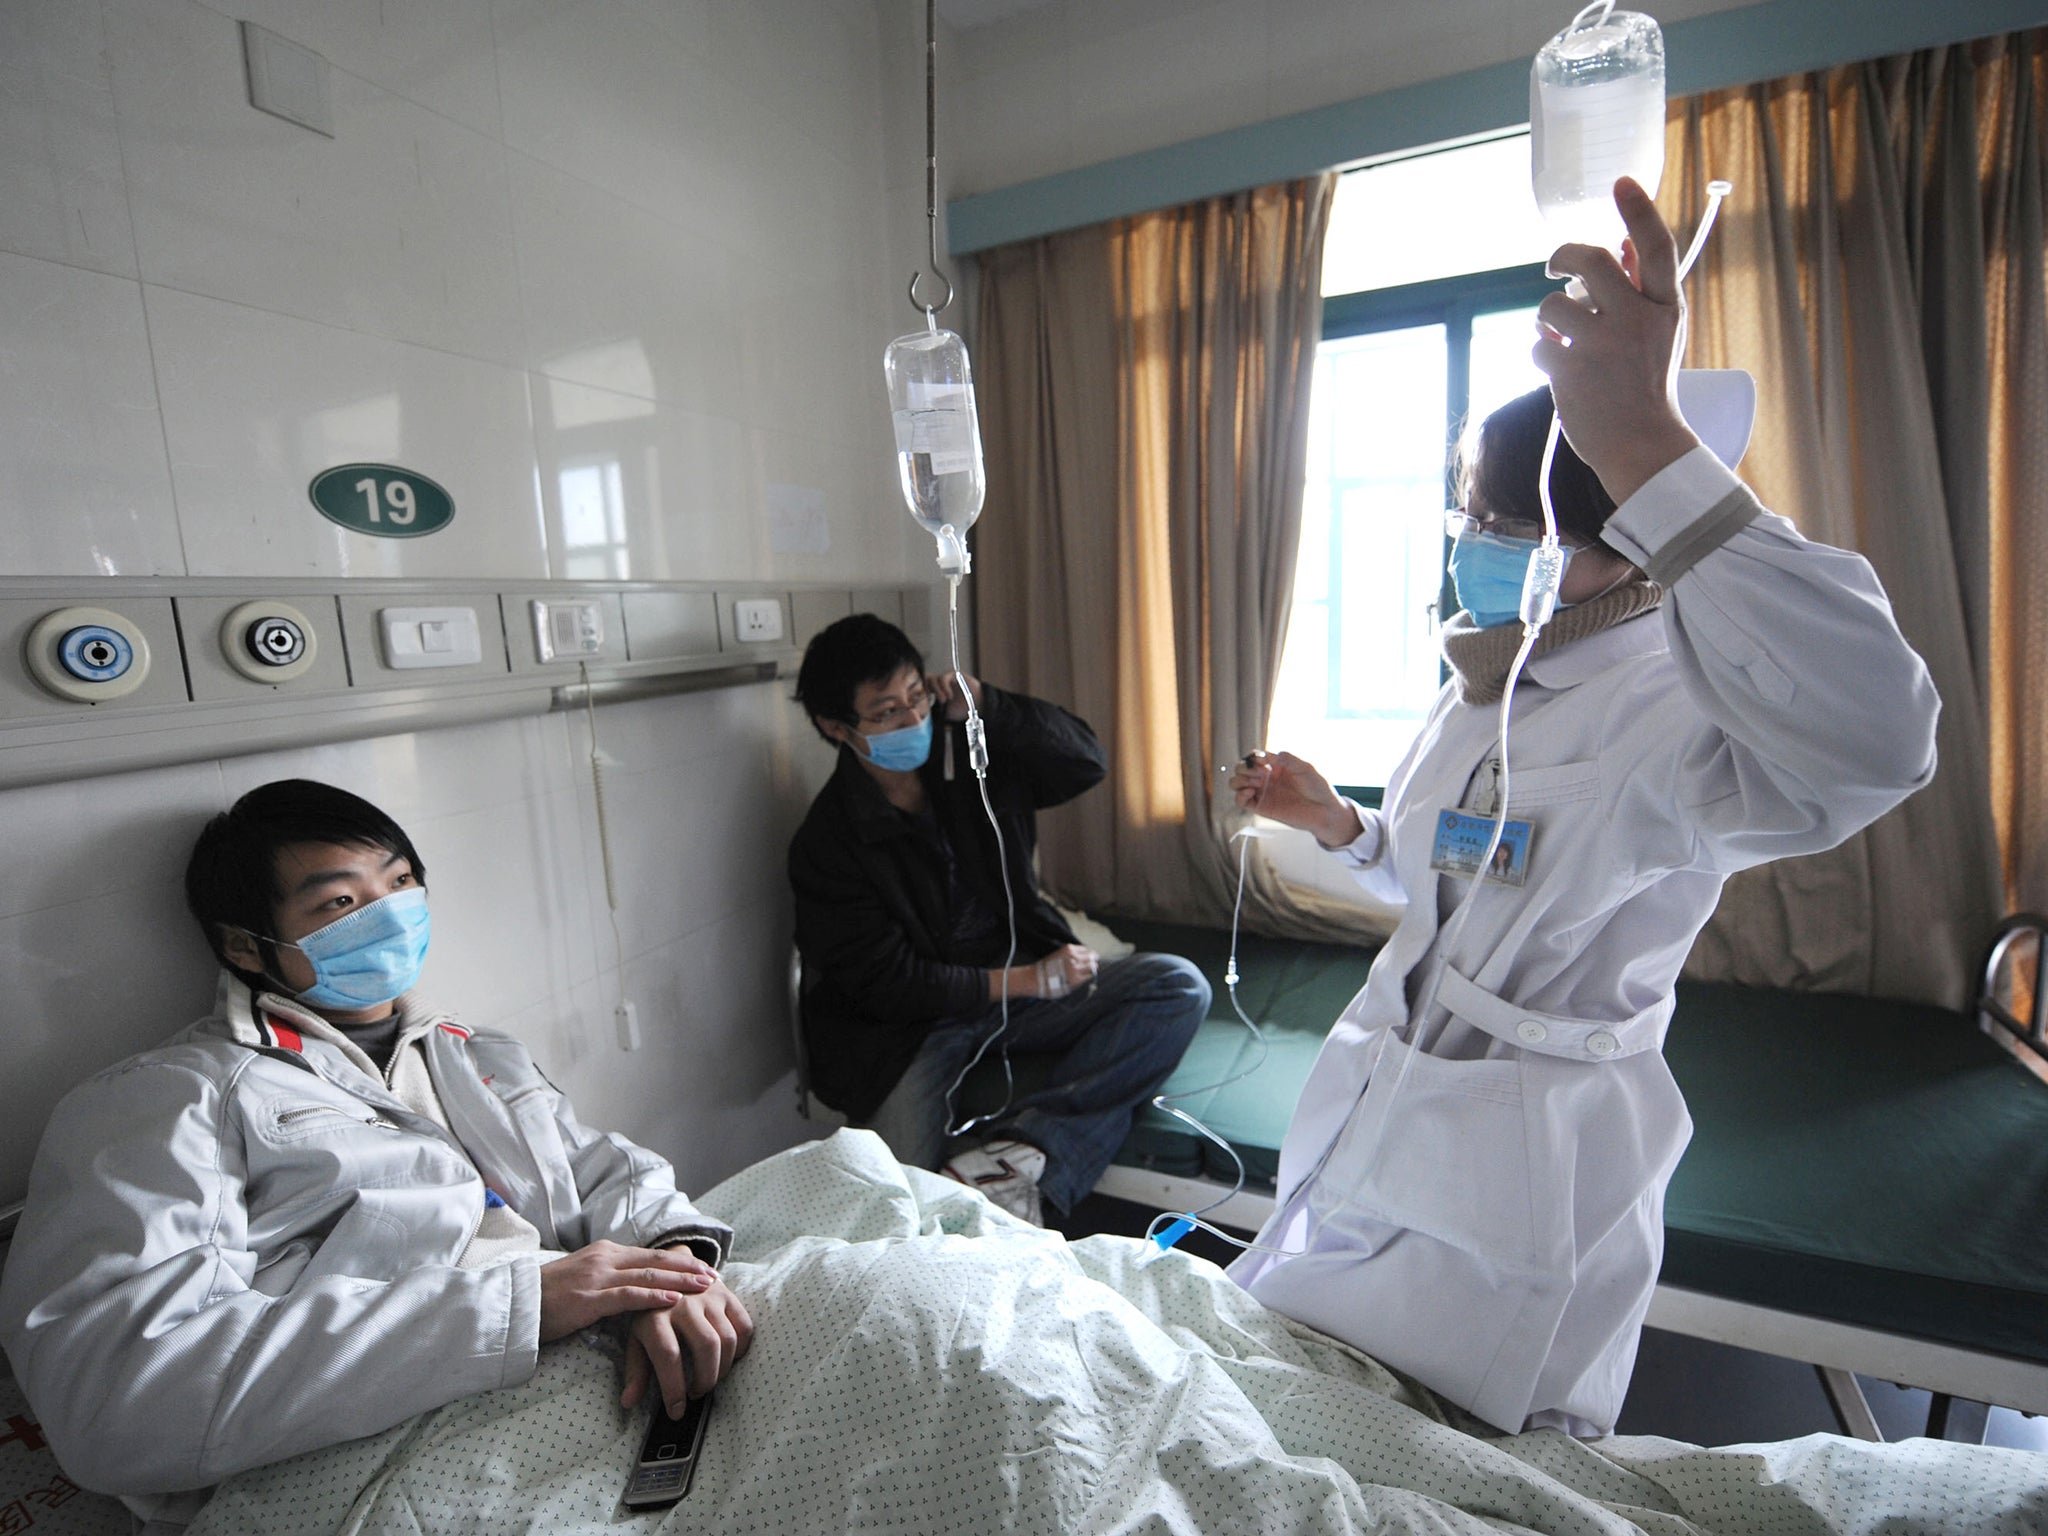 Swine flu caused pandemic in Asia in 2009